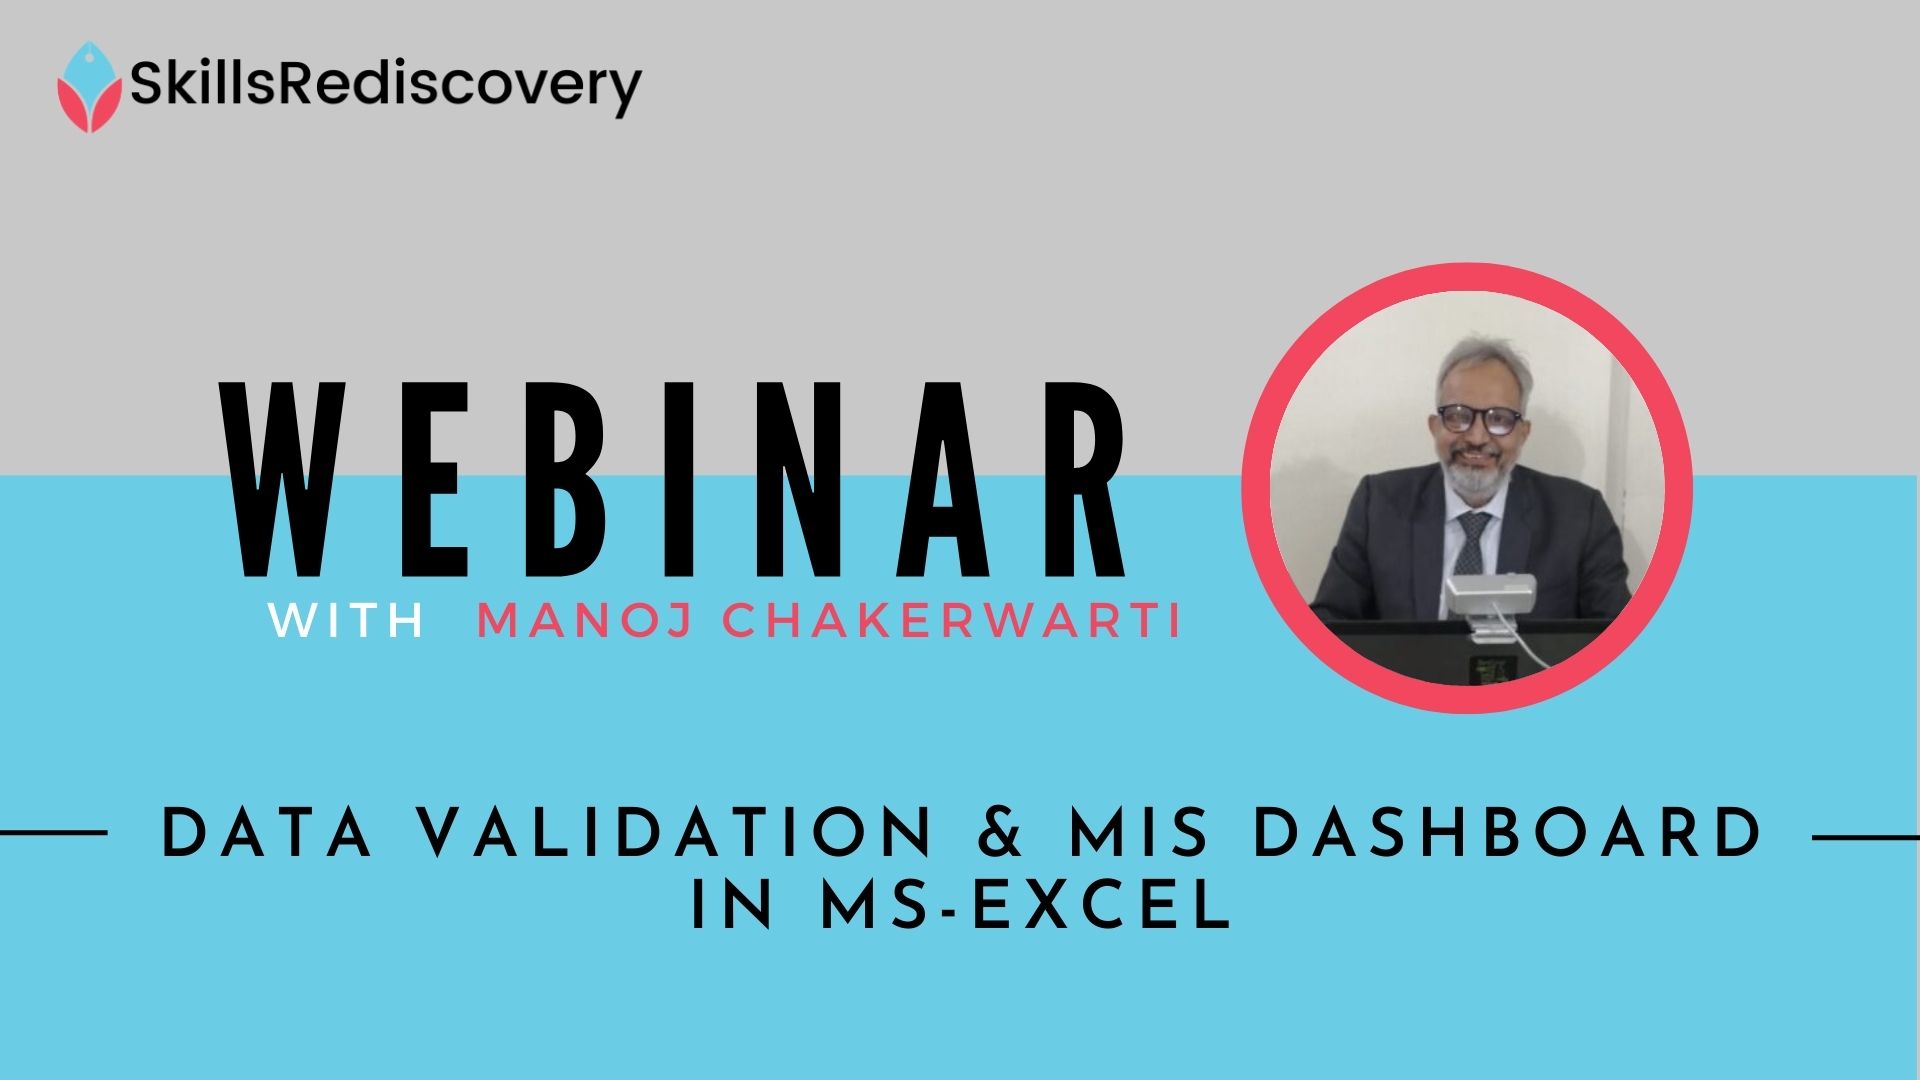 Data Validation & MIS Dashboard in MS-Excel by Manoj Chakerwarti,